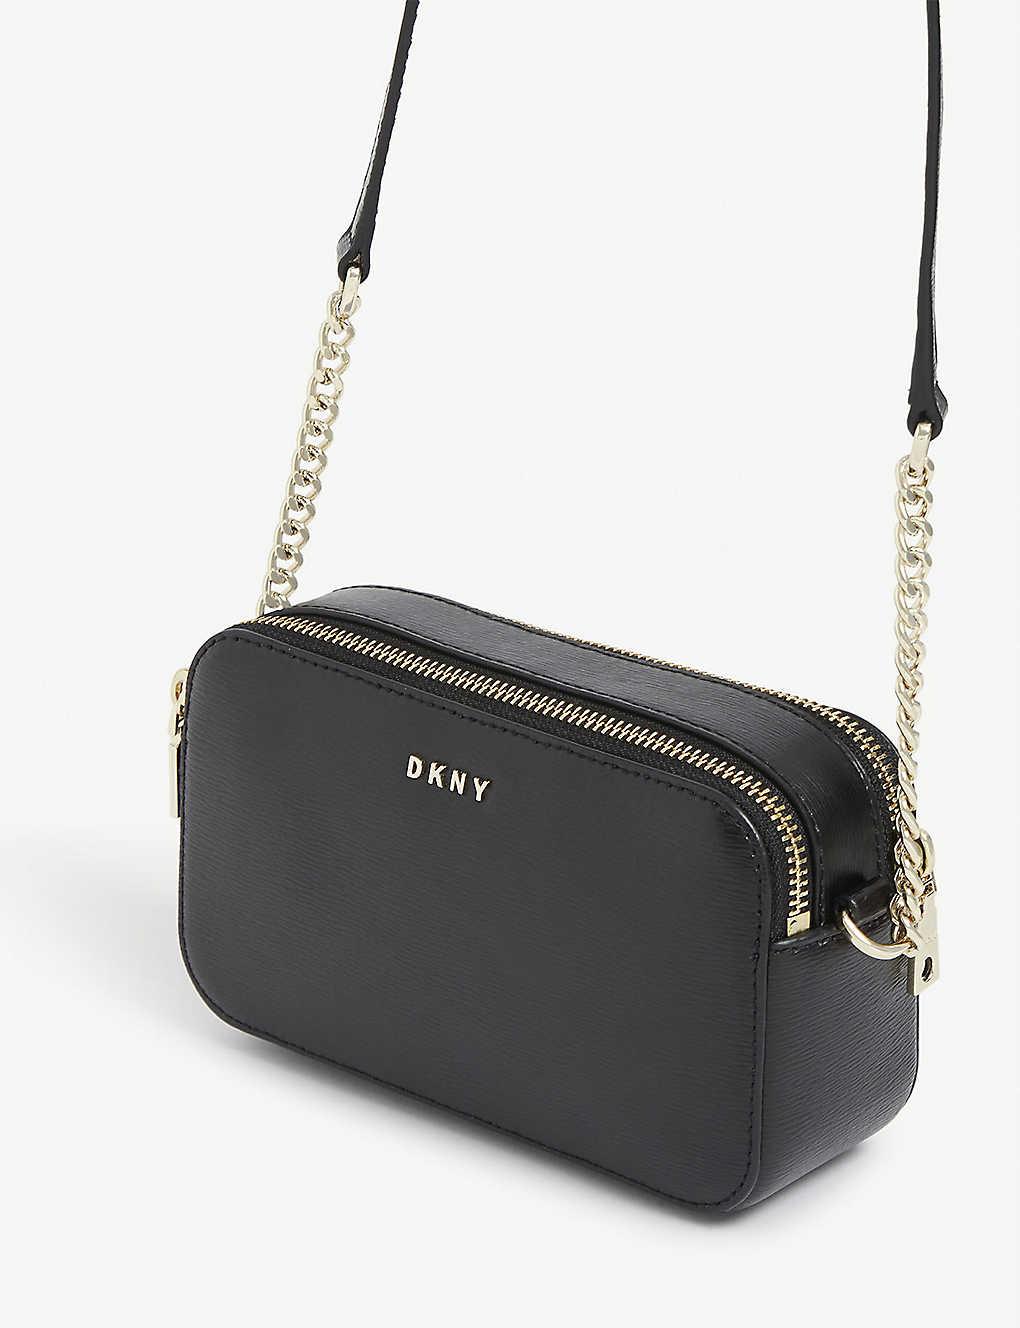 Quantaray Black Leather Double Zip Camera Bag 